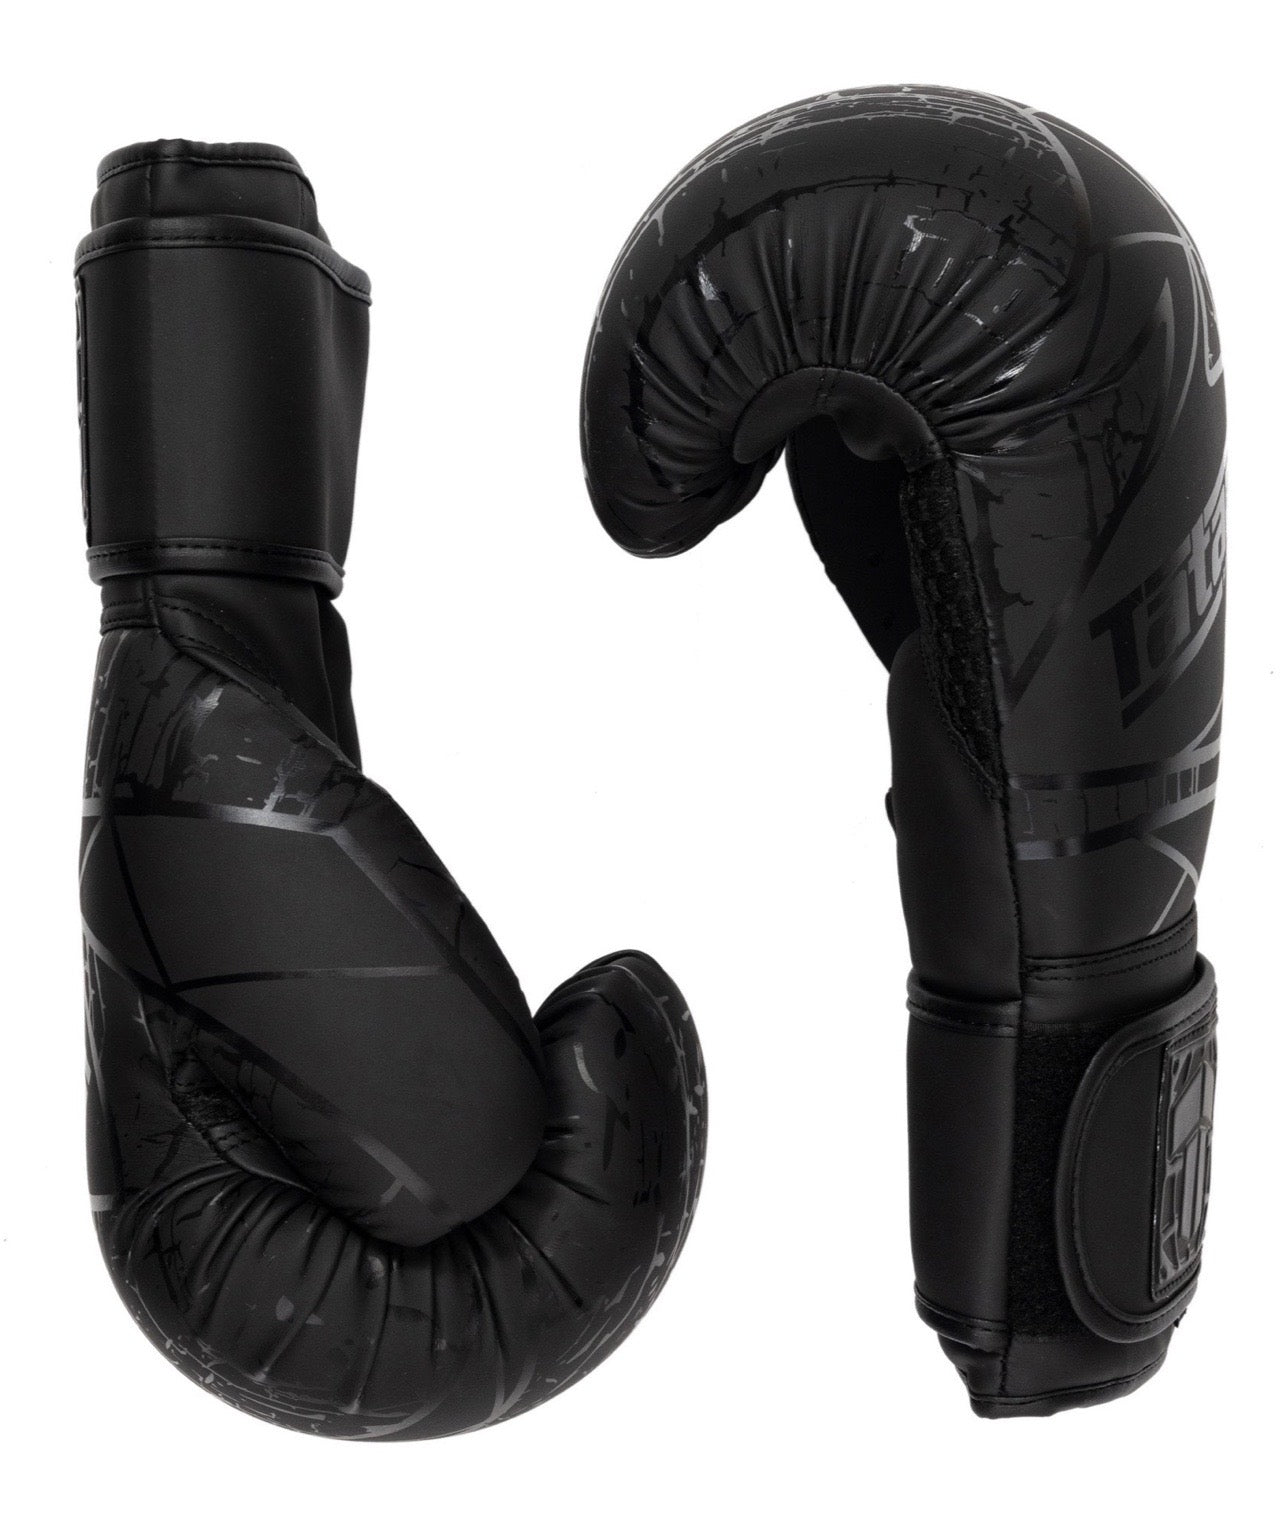 TATAMI Obsidian Boxing Gloves